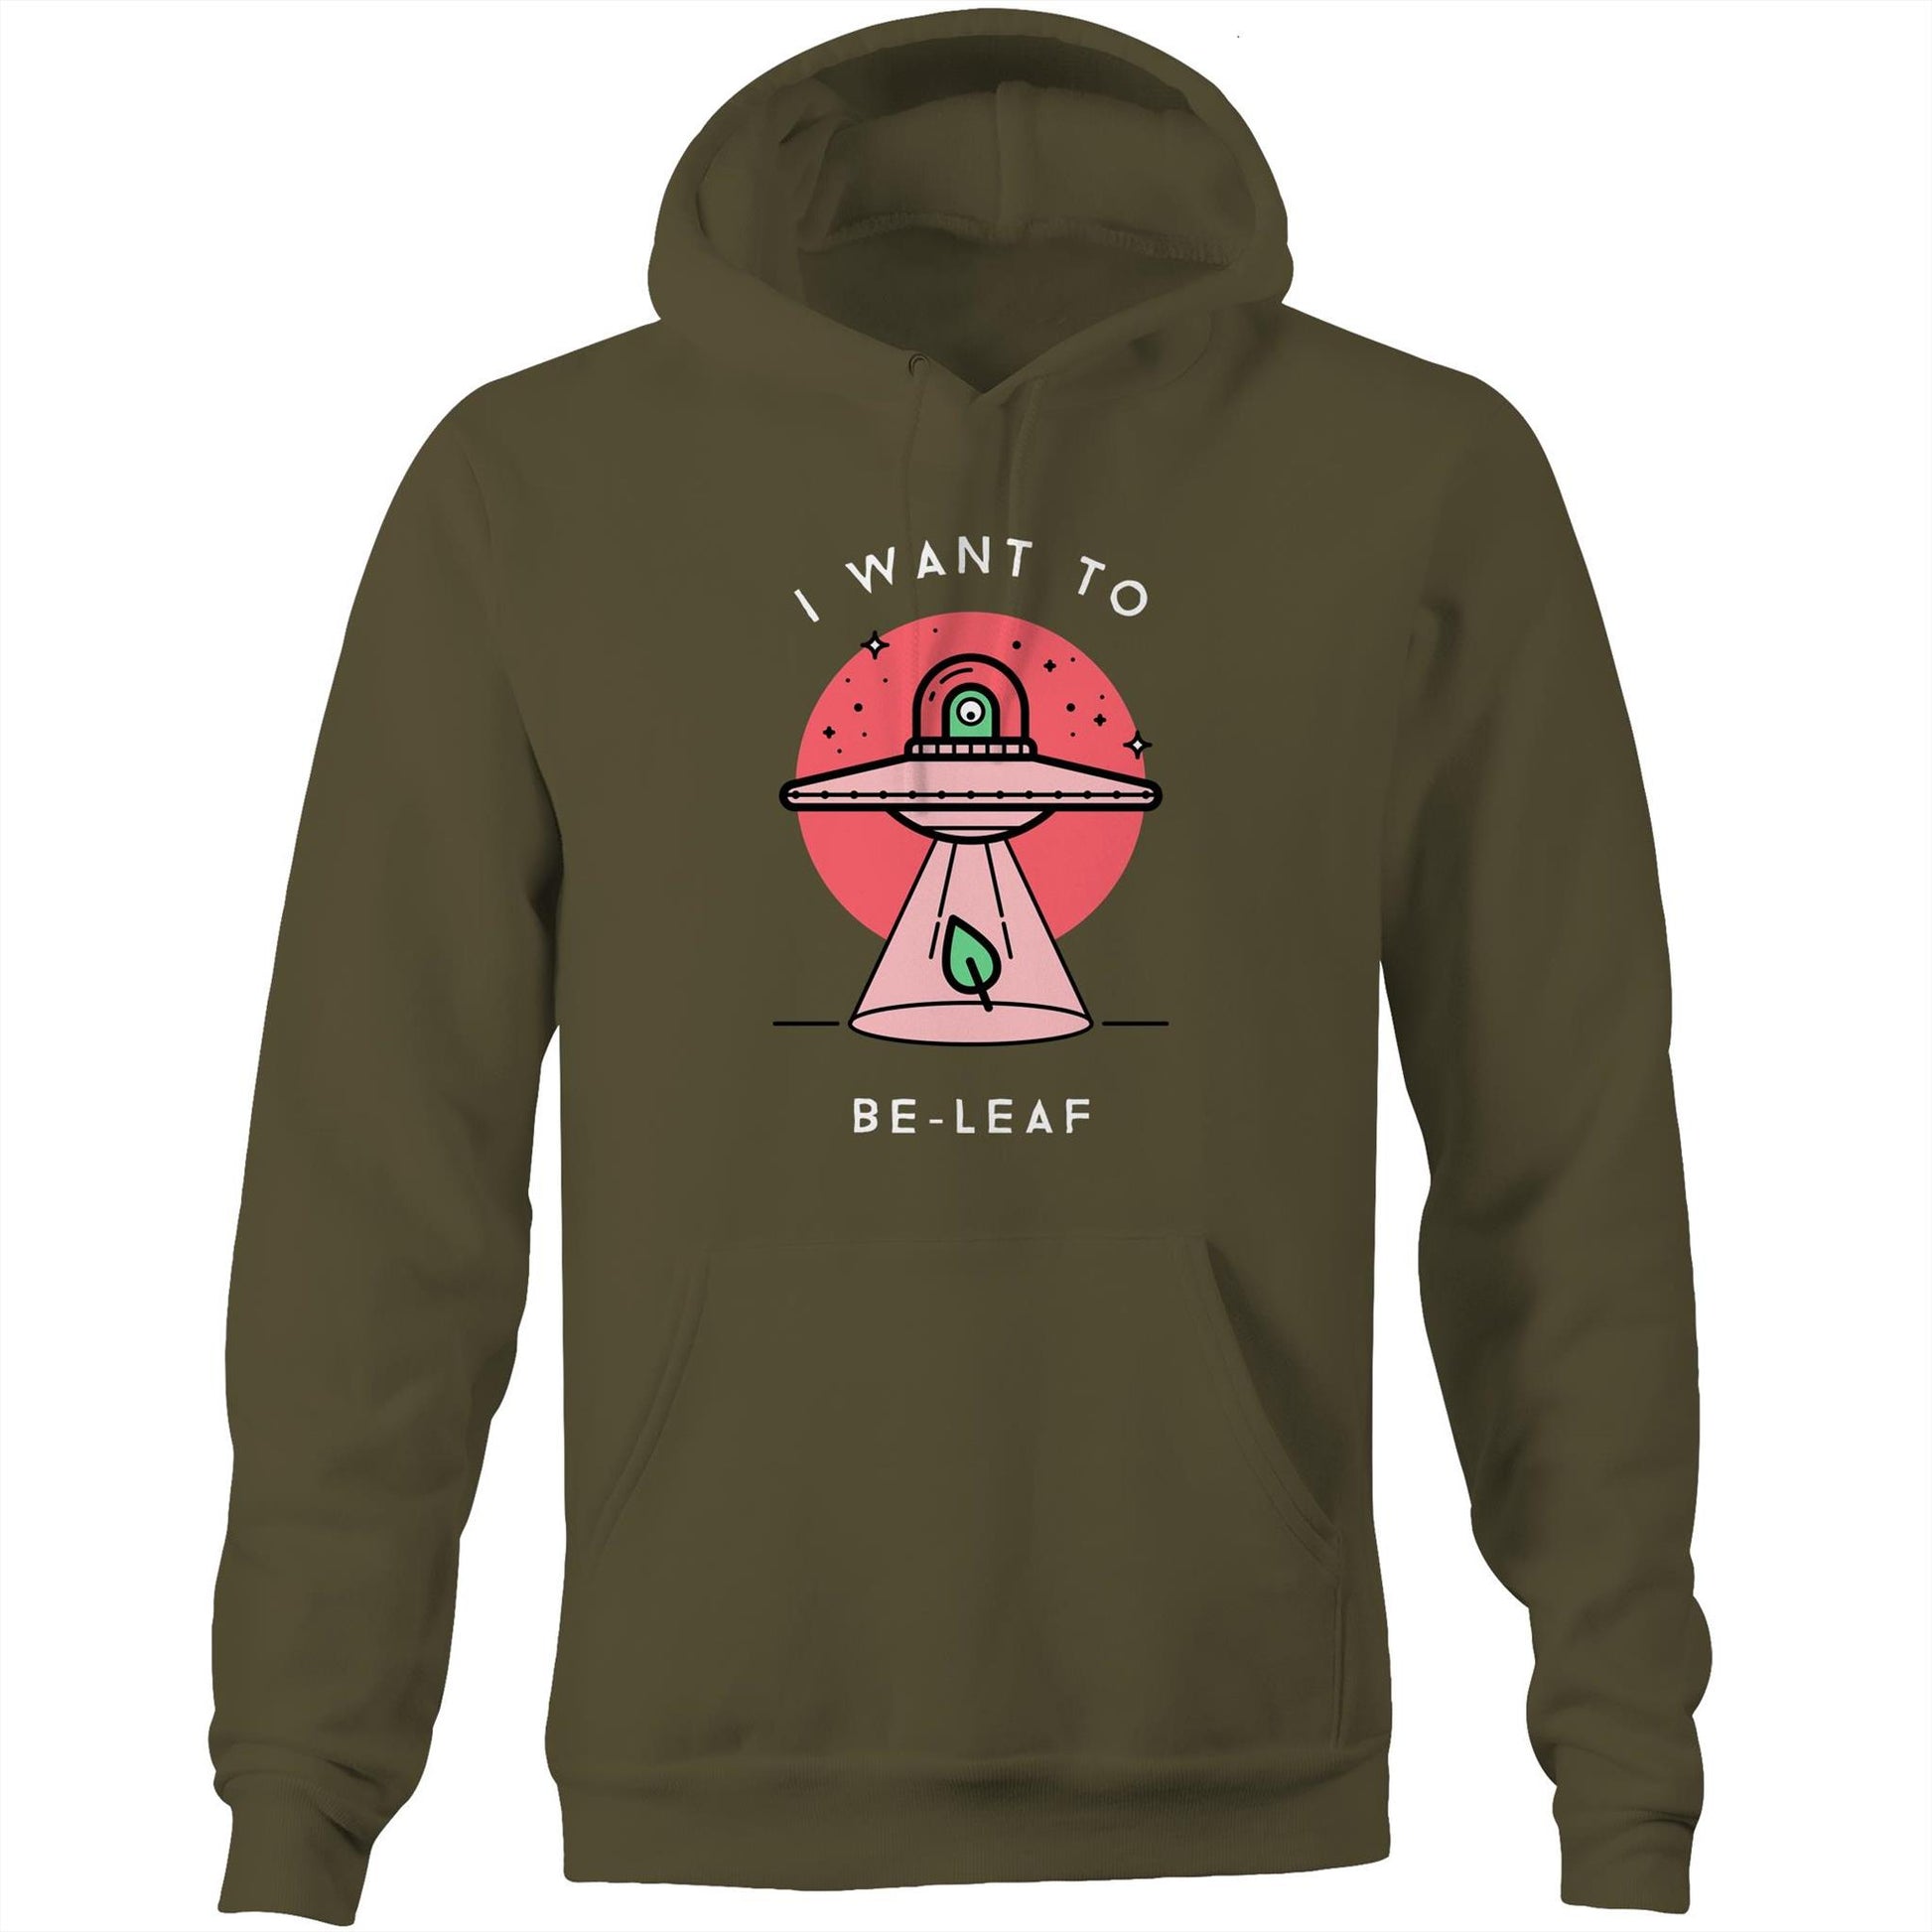 I Want To Be-Leaf, UFO - Pocket Hoodie Sweatshirt Army Hoodie Sci Fi